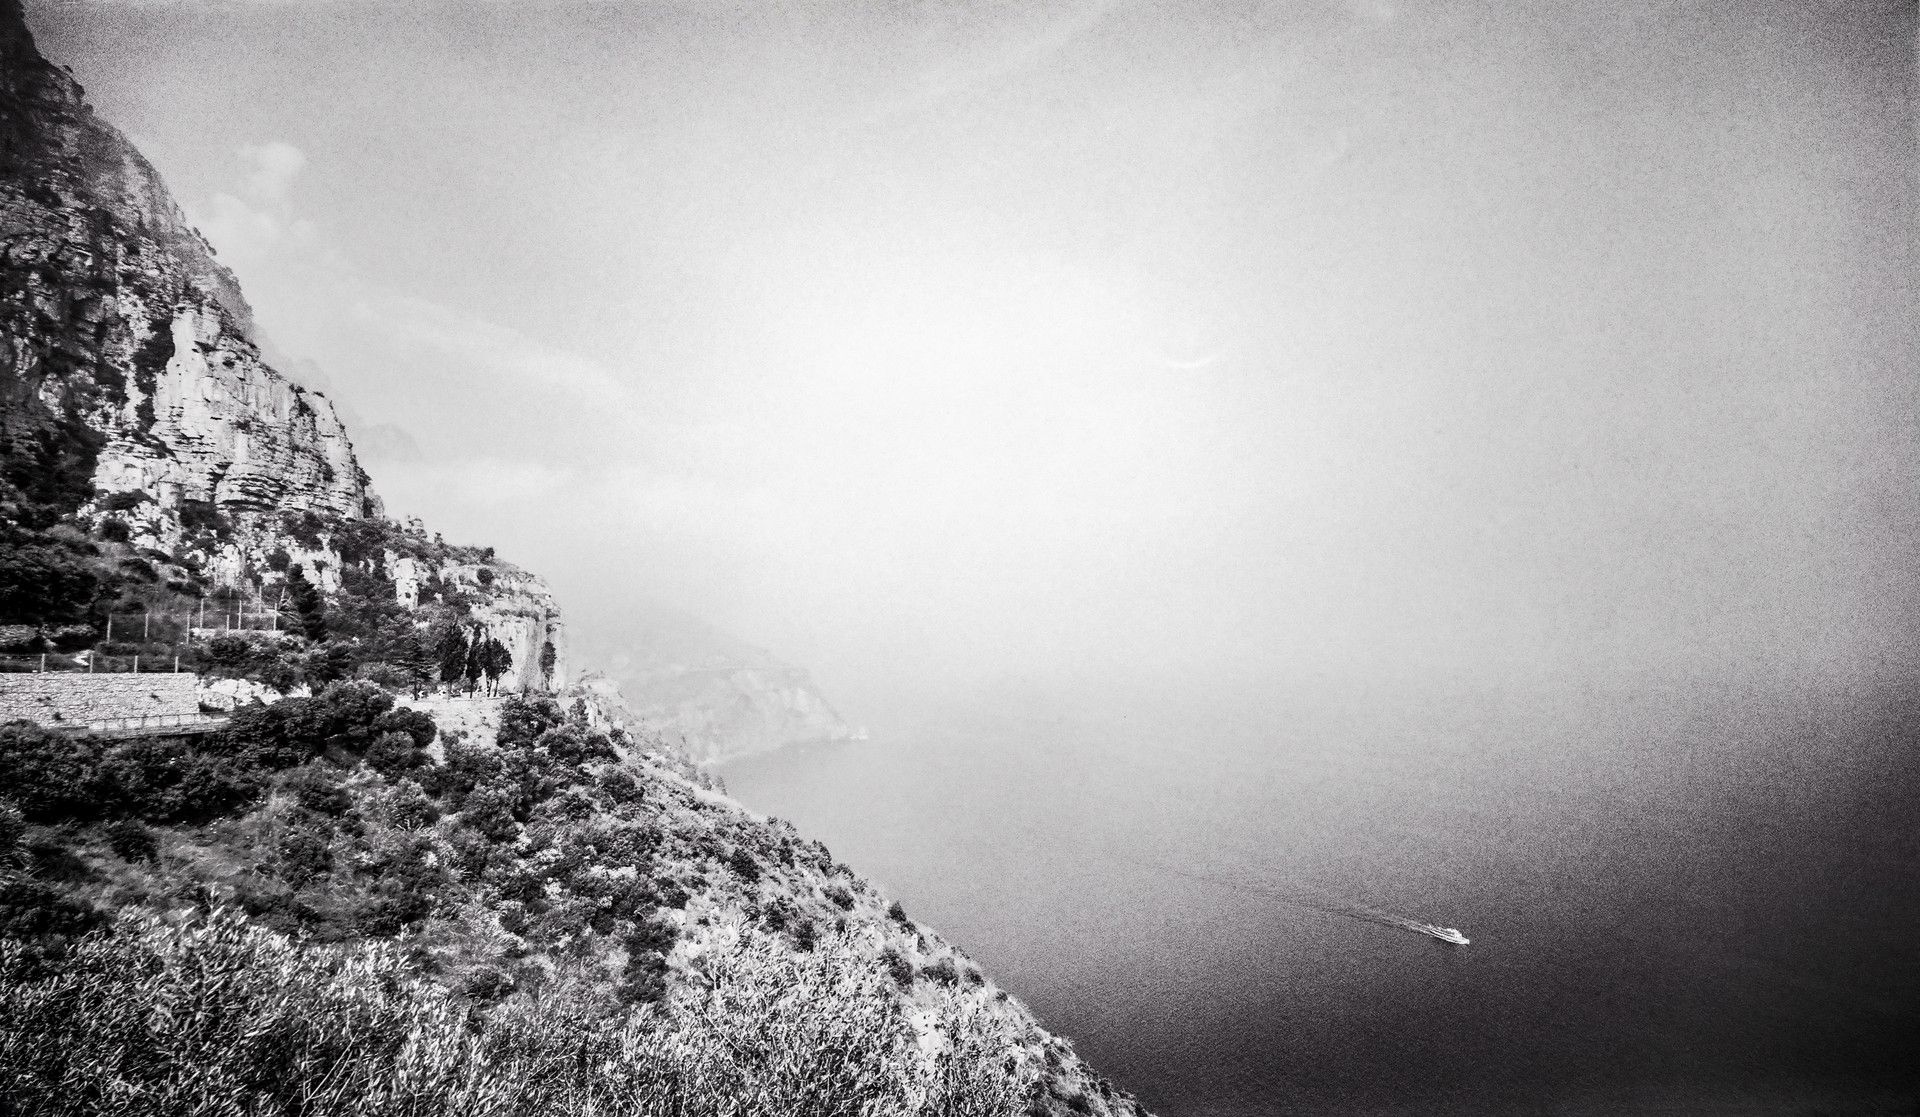 Amalfi Coastline, Boat to the Island of Capri, Italy by Lawrence McFarland